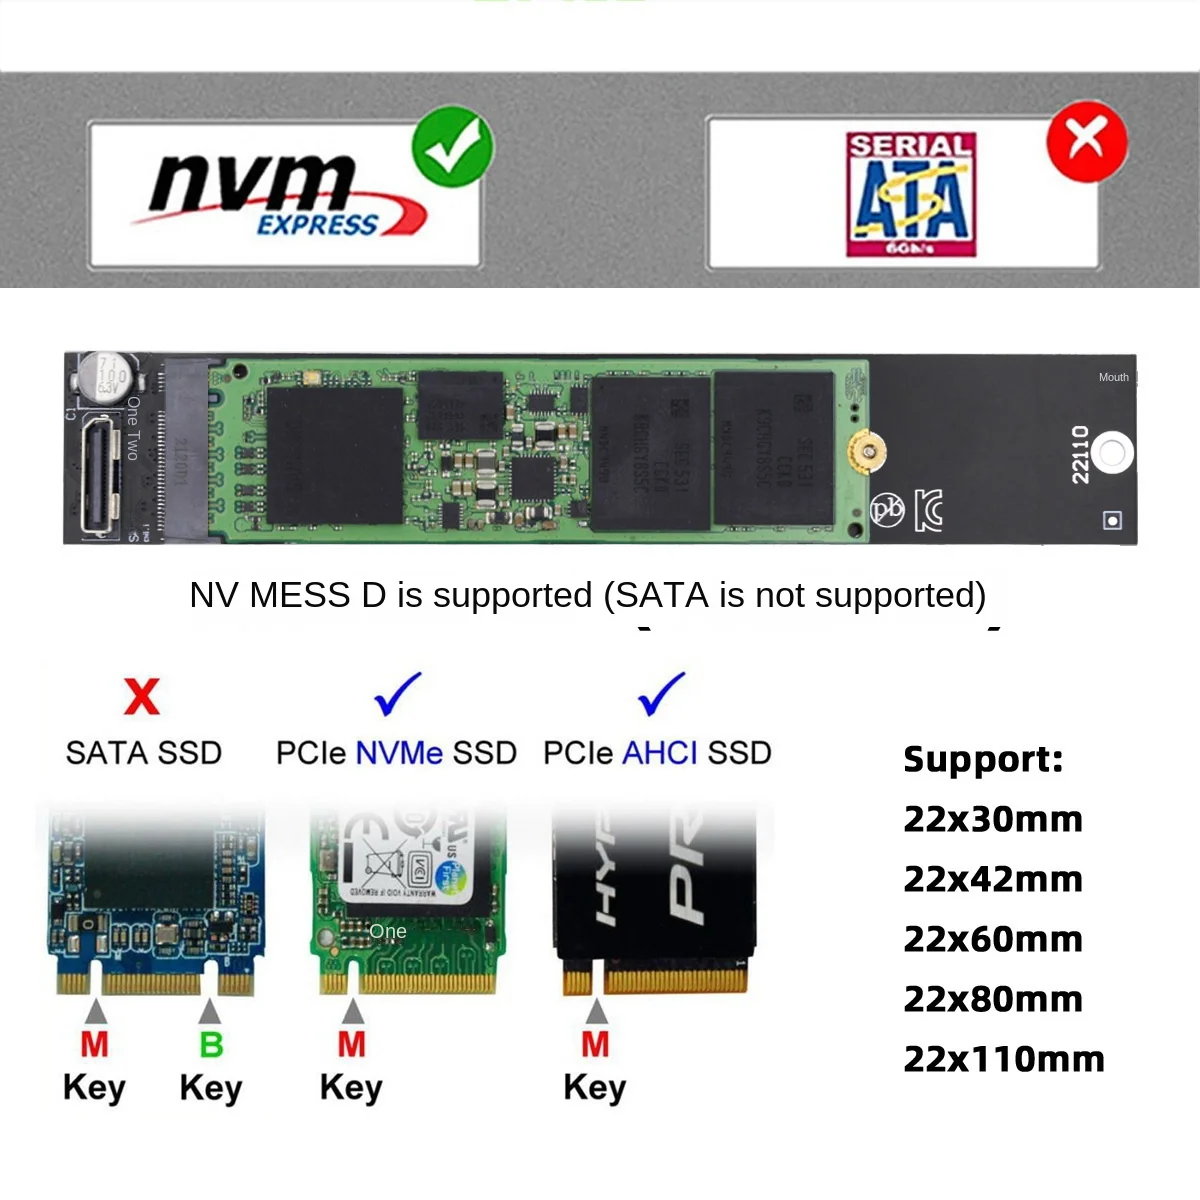 Oculink SFF-8611 SFF-8612, da NVMe M. 2 Ngff M-Tipka za vmesniško Kartico Za MVMe M2 SSD